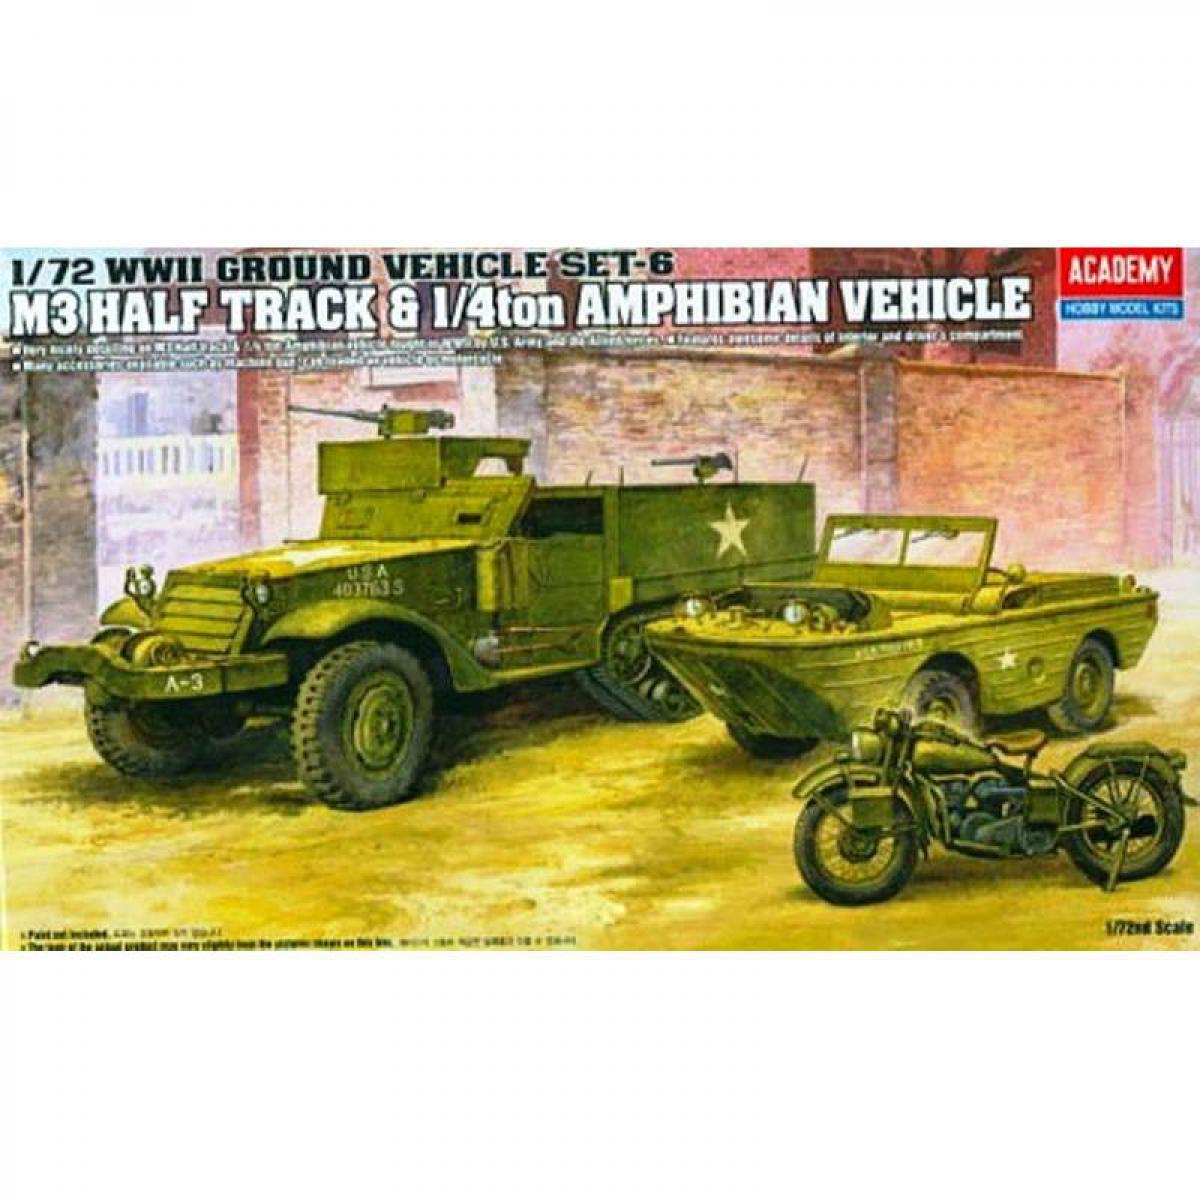 Academy - Maquette Véhicule M3 Half Track & 1/4ton Amphibian Vehicle - Voitures